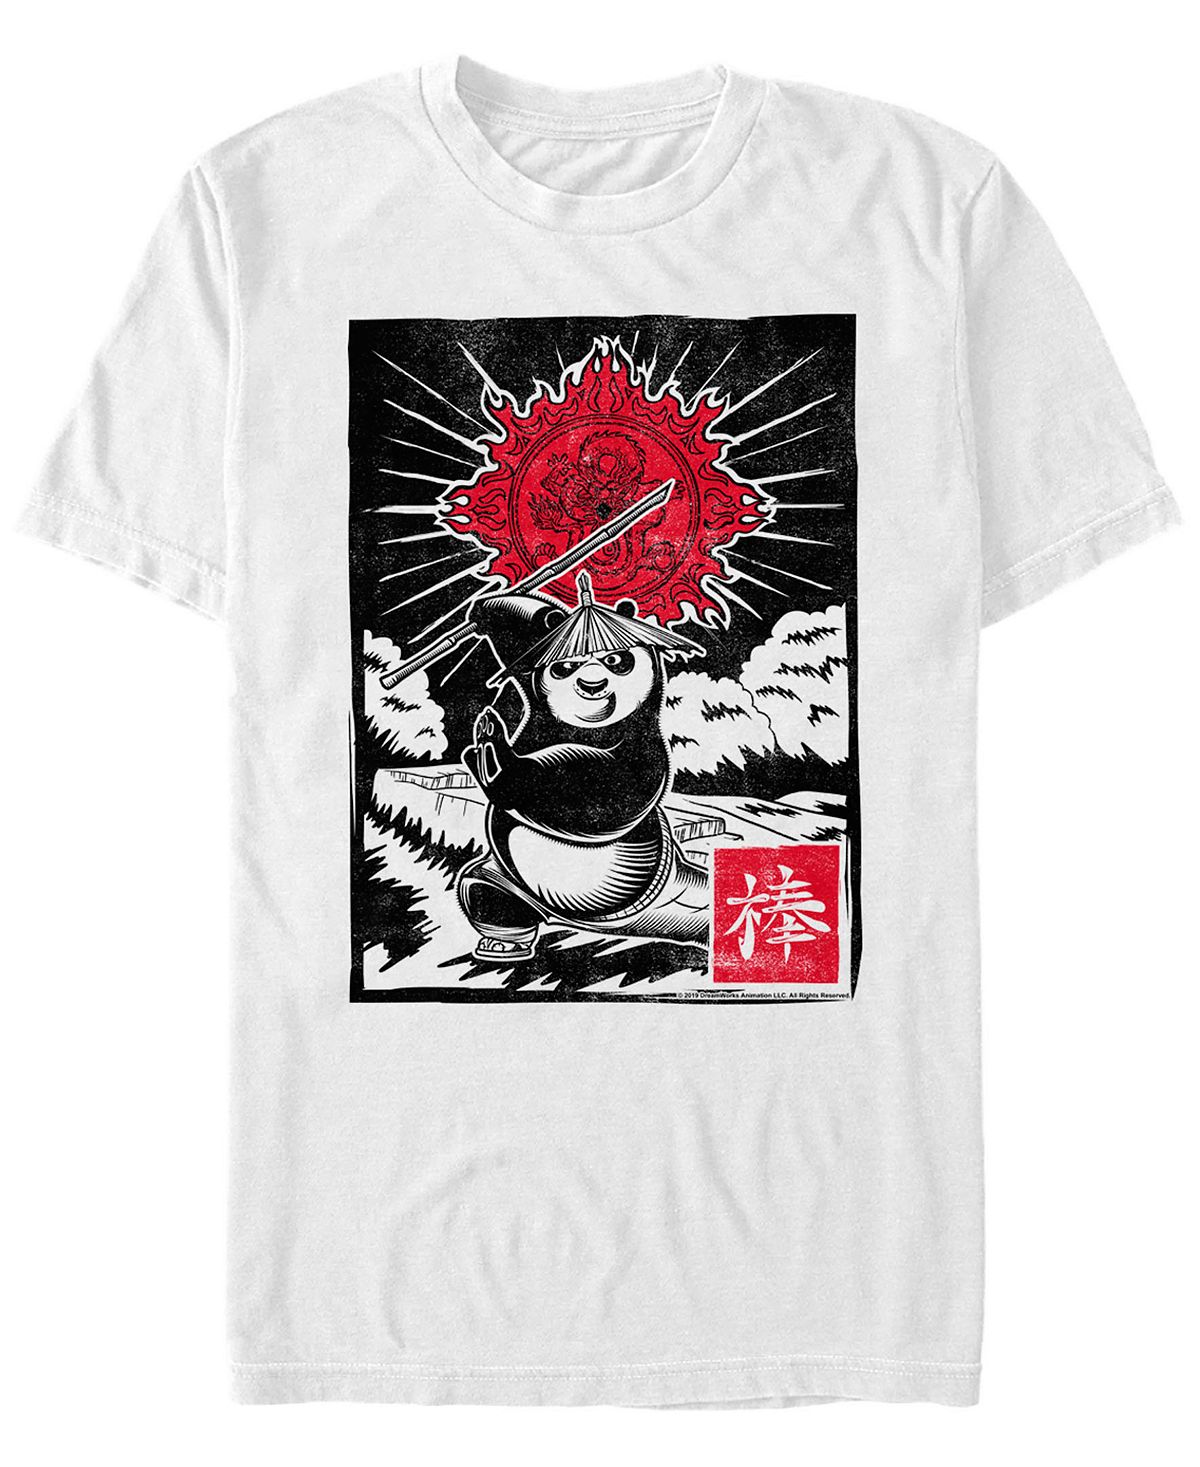 кунг фу панда книжка с цветными мелками Кунг-фу панда мужская футболка с коротким рукавом с плакатом po warrior Fifth Sun, белый